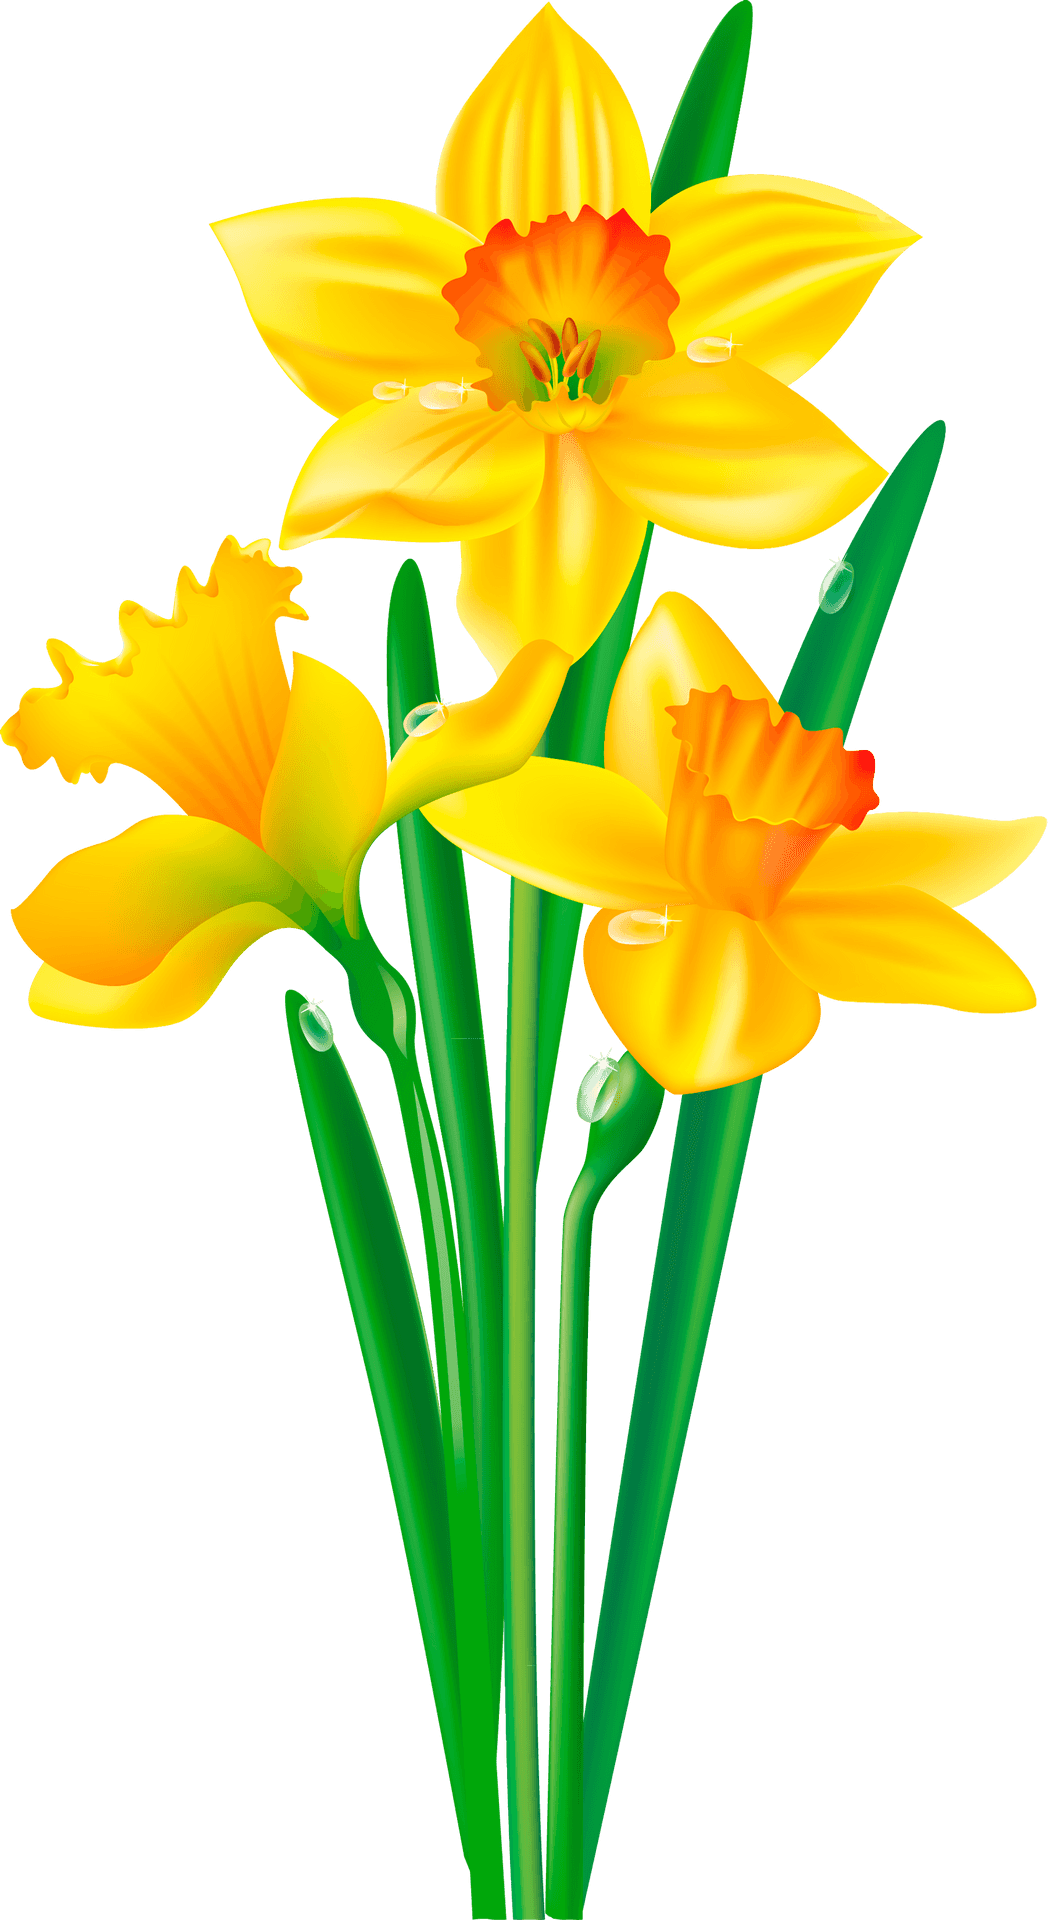 Vibrant Yellow Daffodils Illustration PNG image